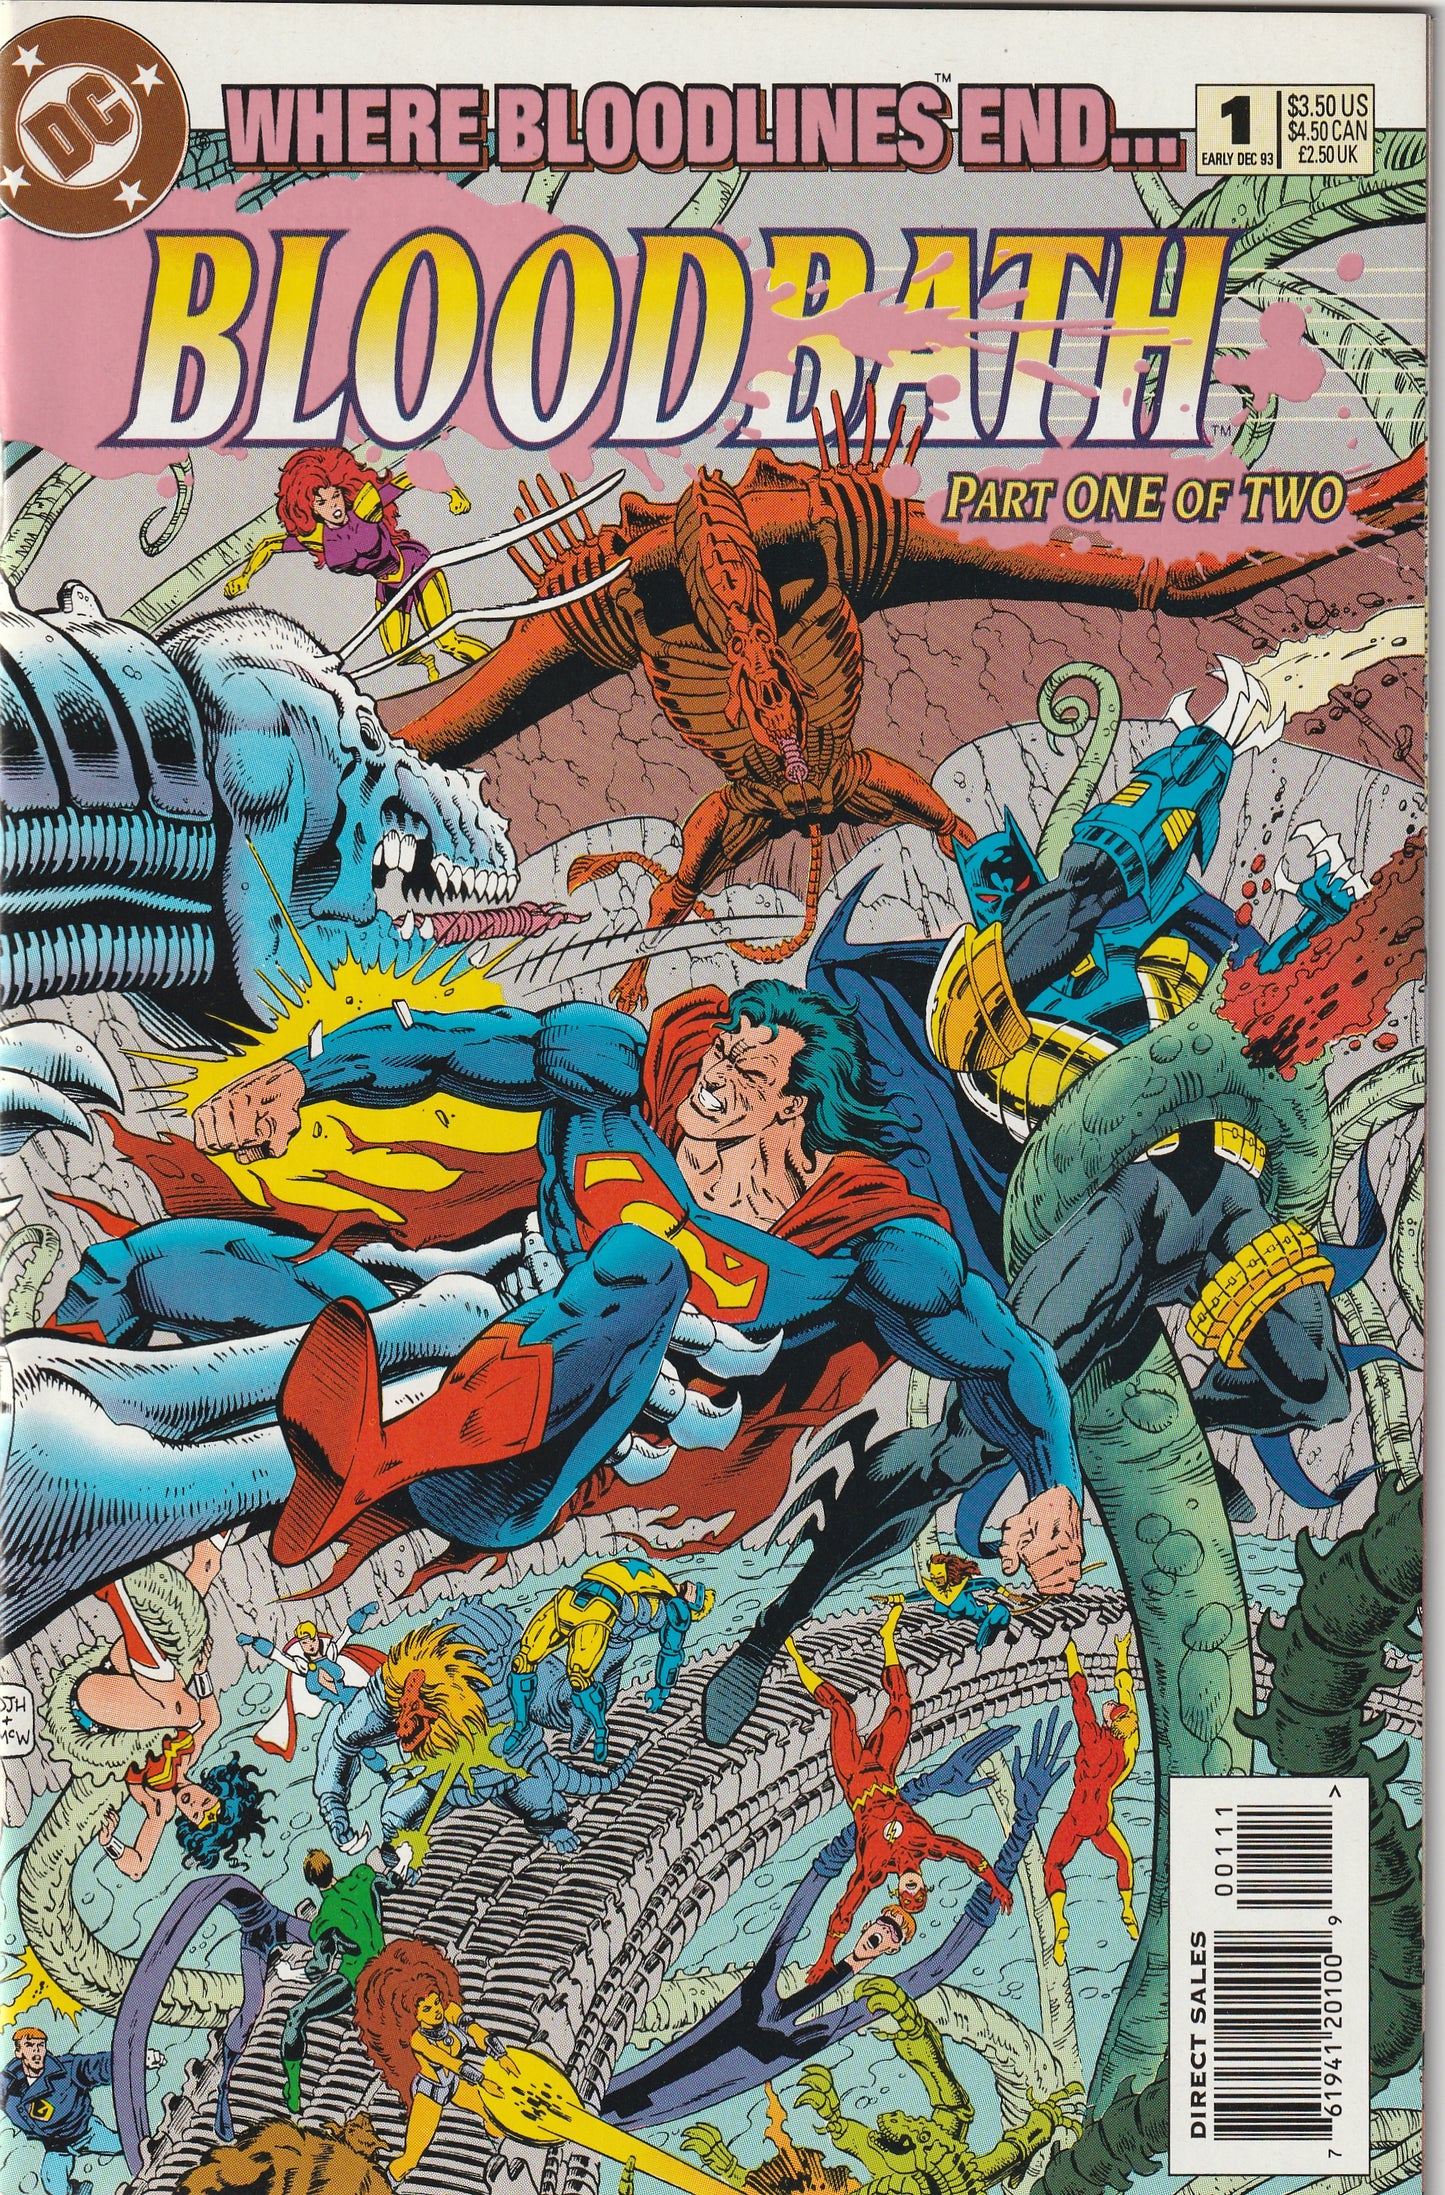 Bloodbath (1993) - Complete 2 issue mini-series